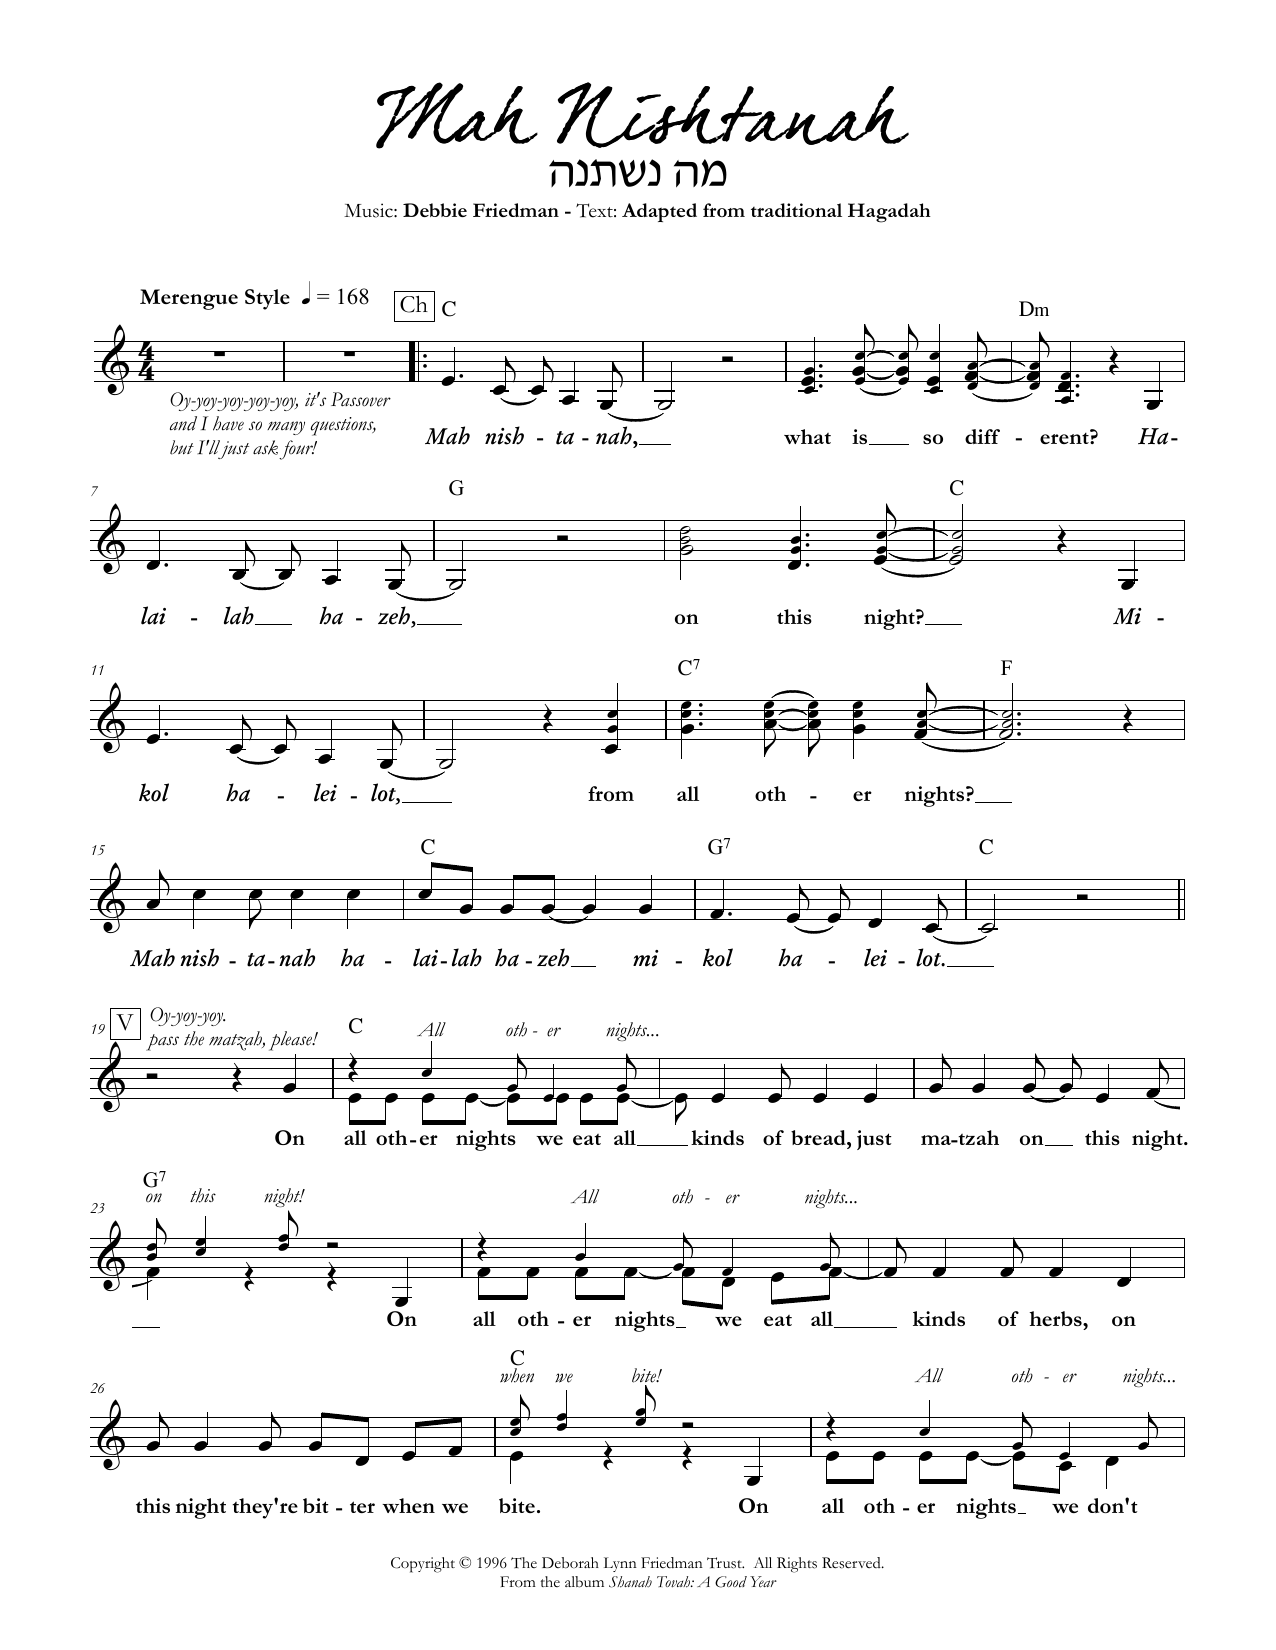 Debbie Friedman Mah Nishtanah Sheet Music Notes & Chords for Lead Sheet / Fake Book - Download or Print PDF